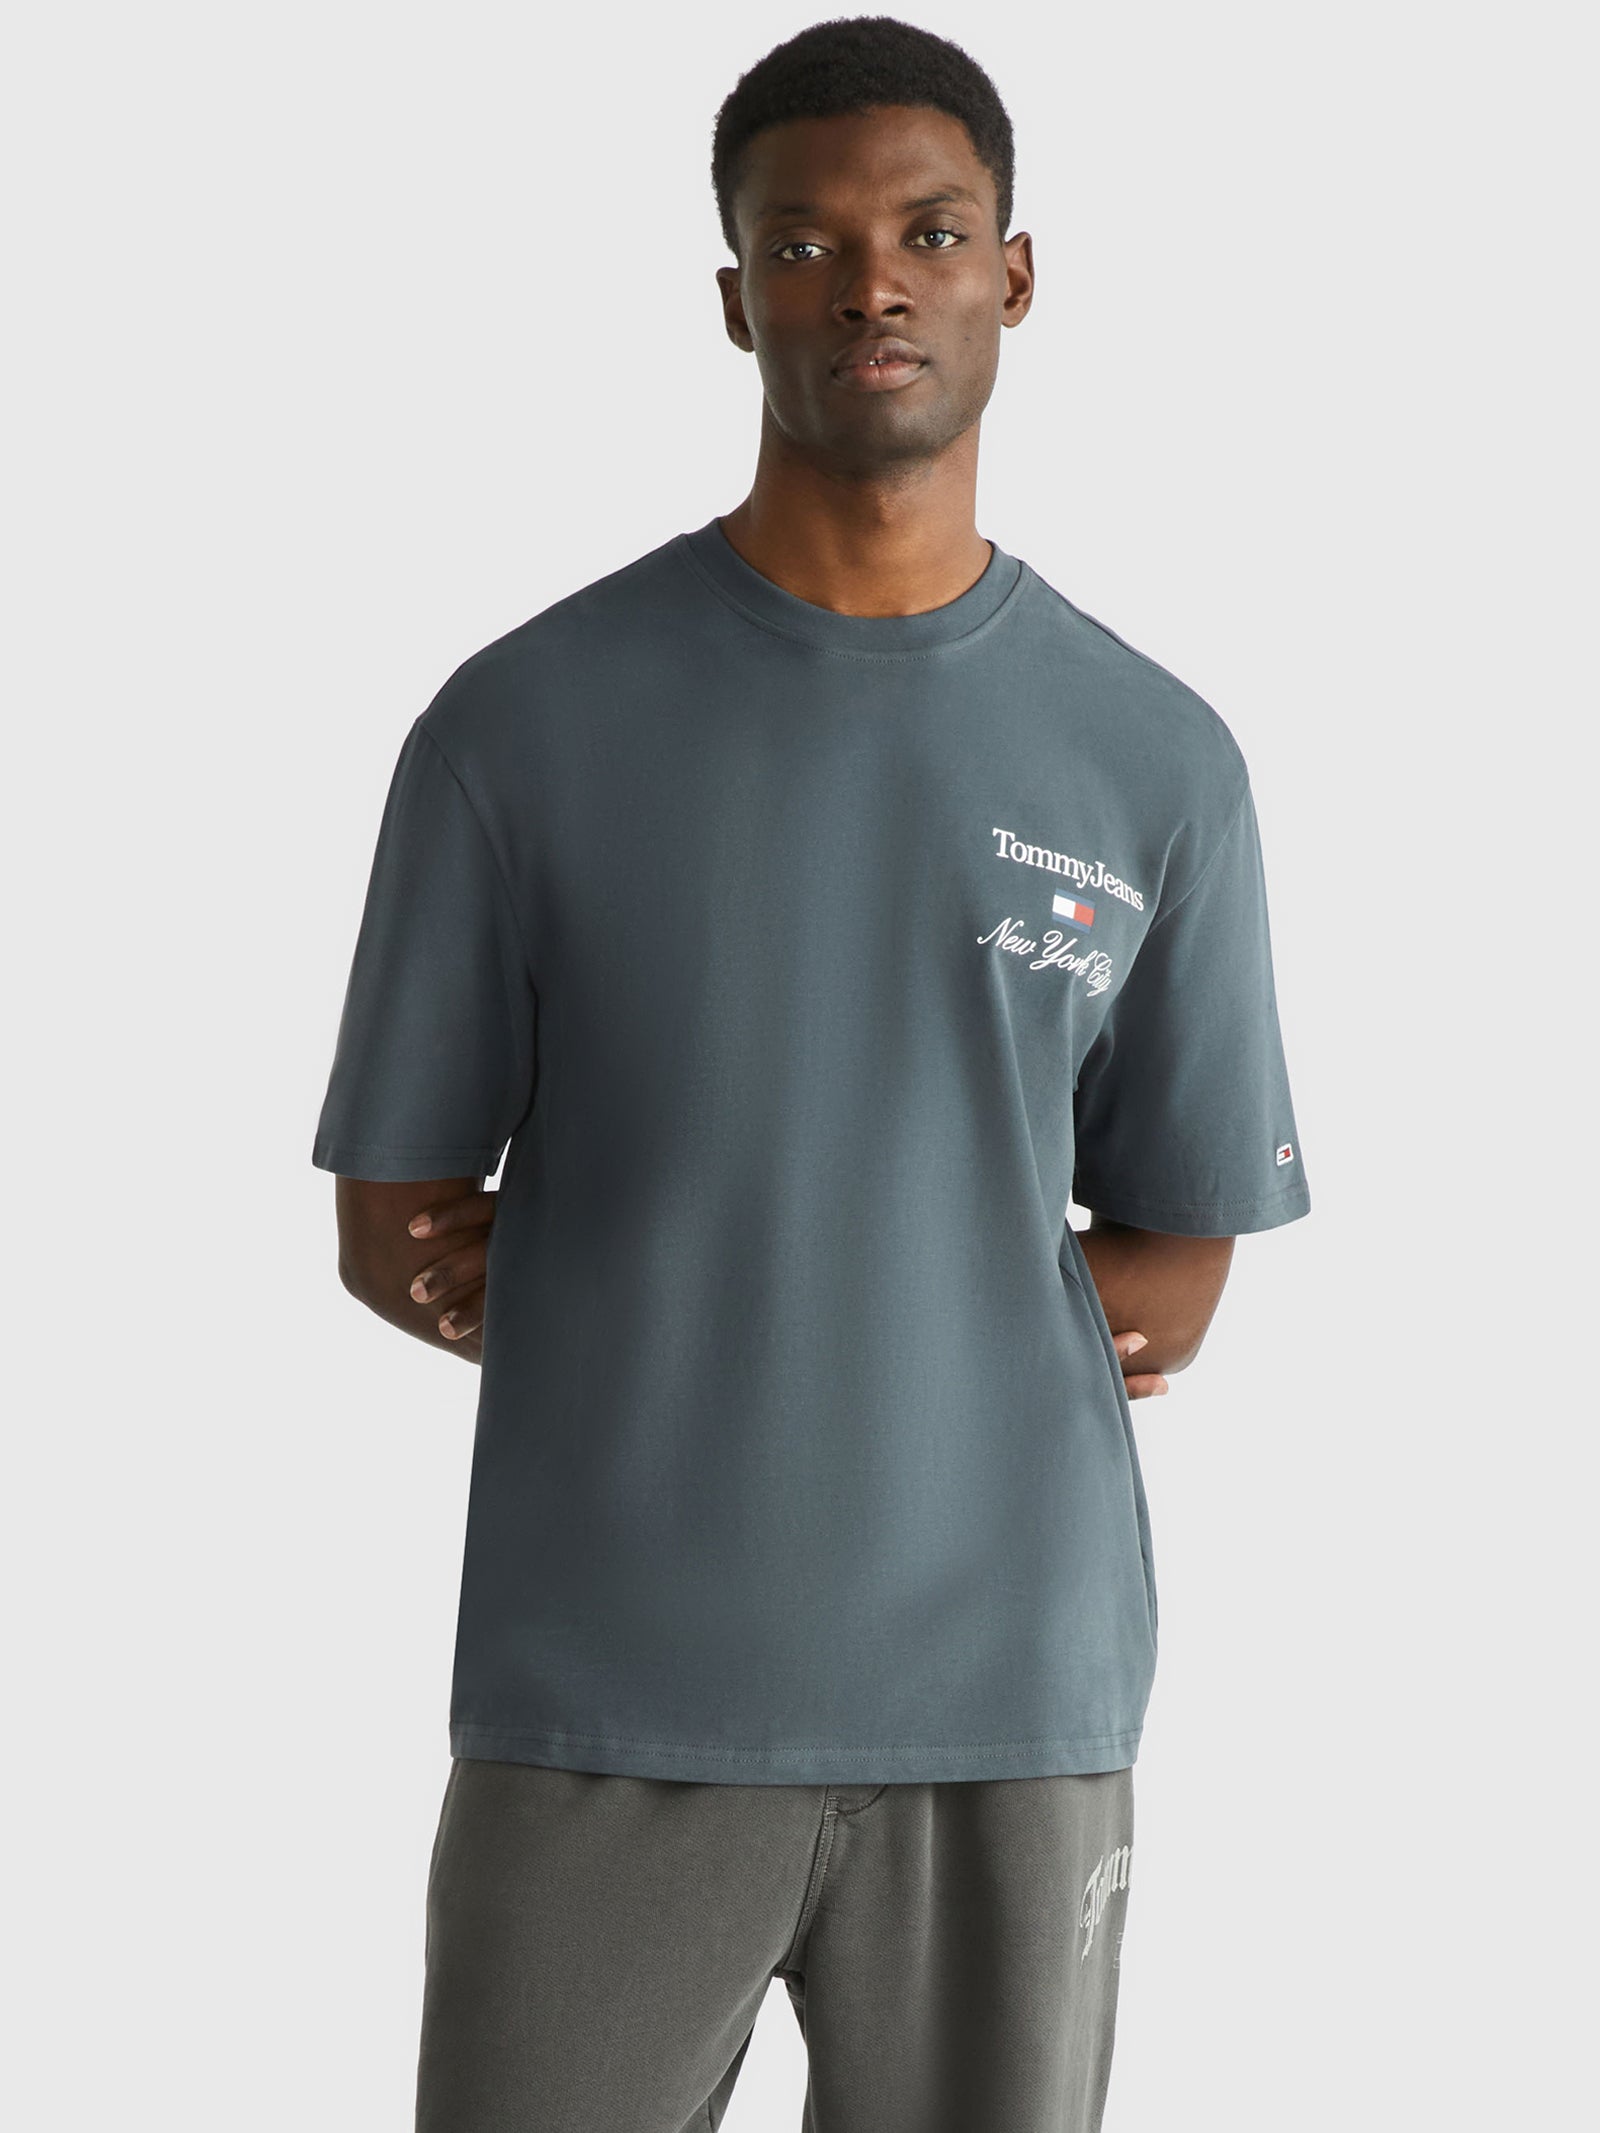 Luxe Script Athletic T-Shirt